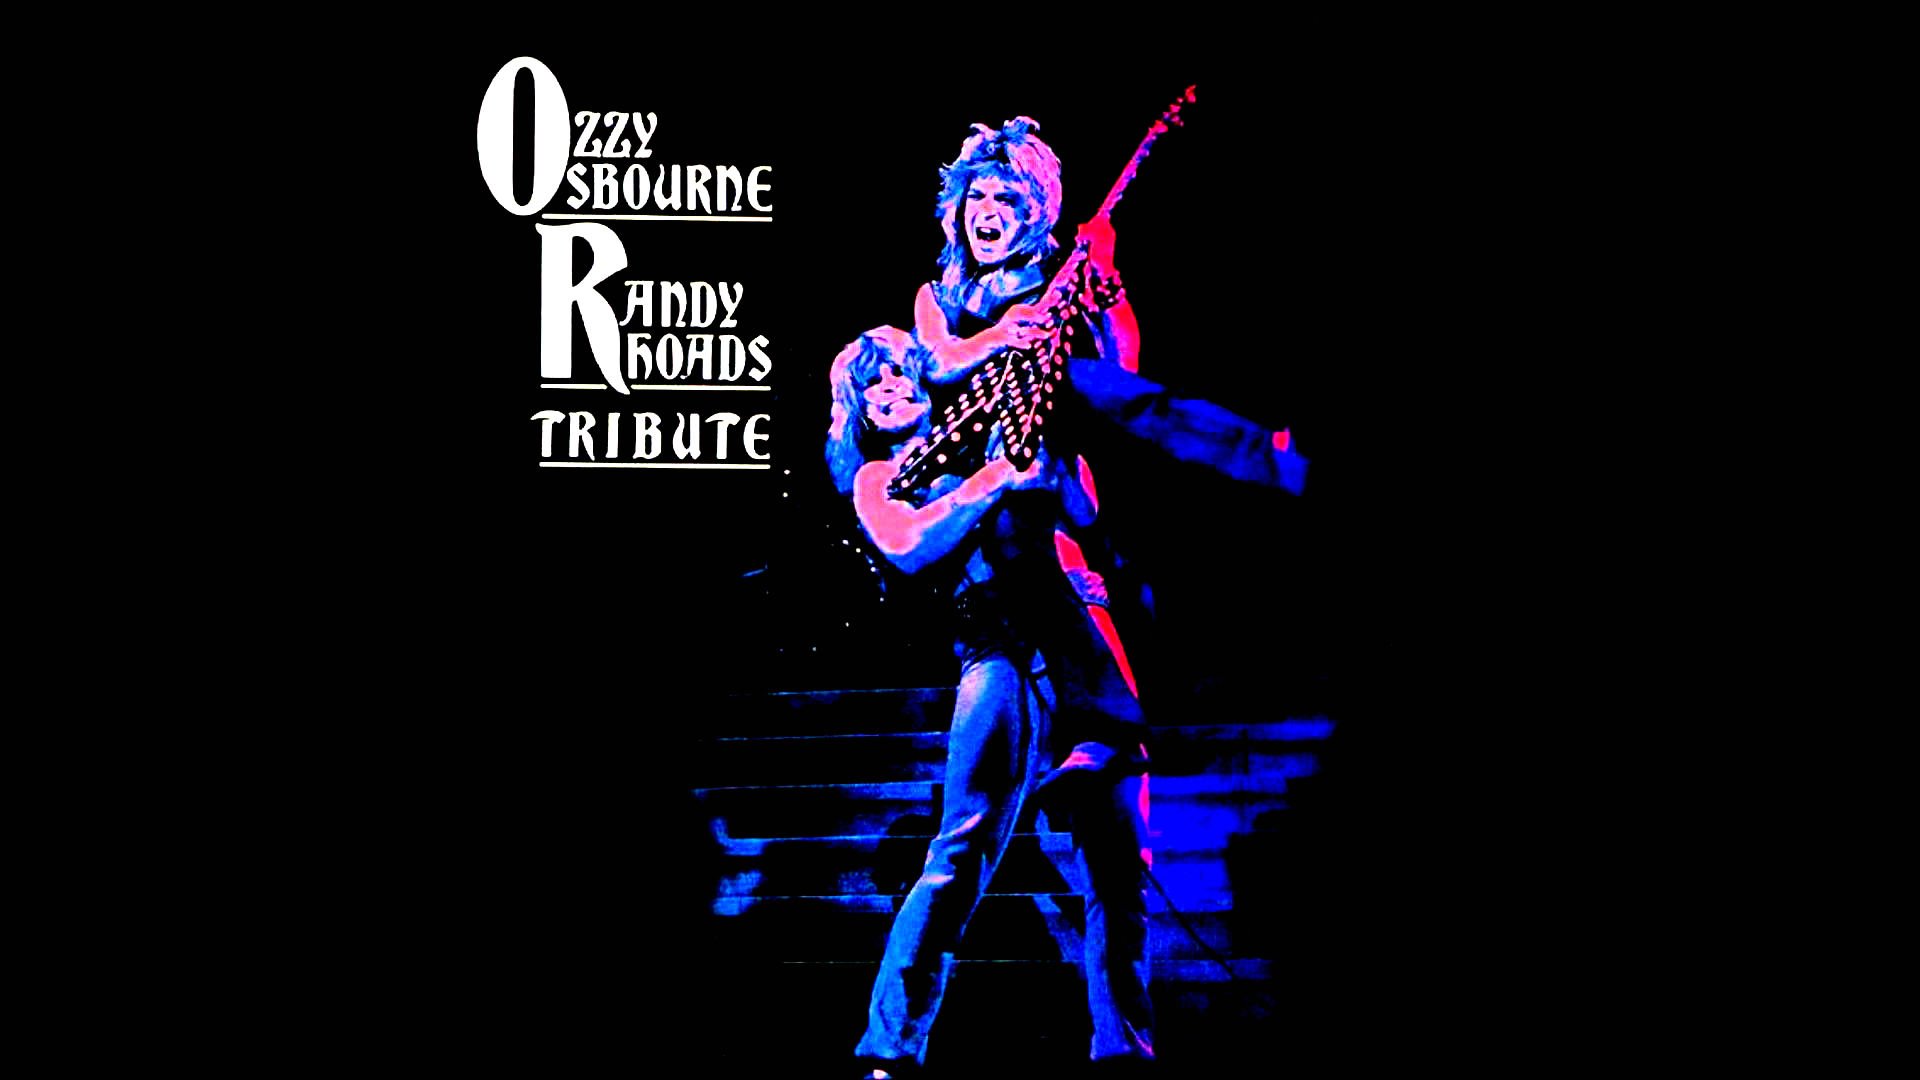 Ozzy Osbourne Heavy Metal Randy Rhoads Guitar Concert Poster Wallpaper